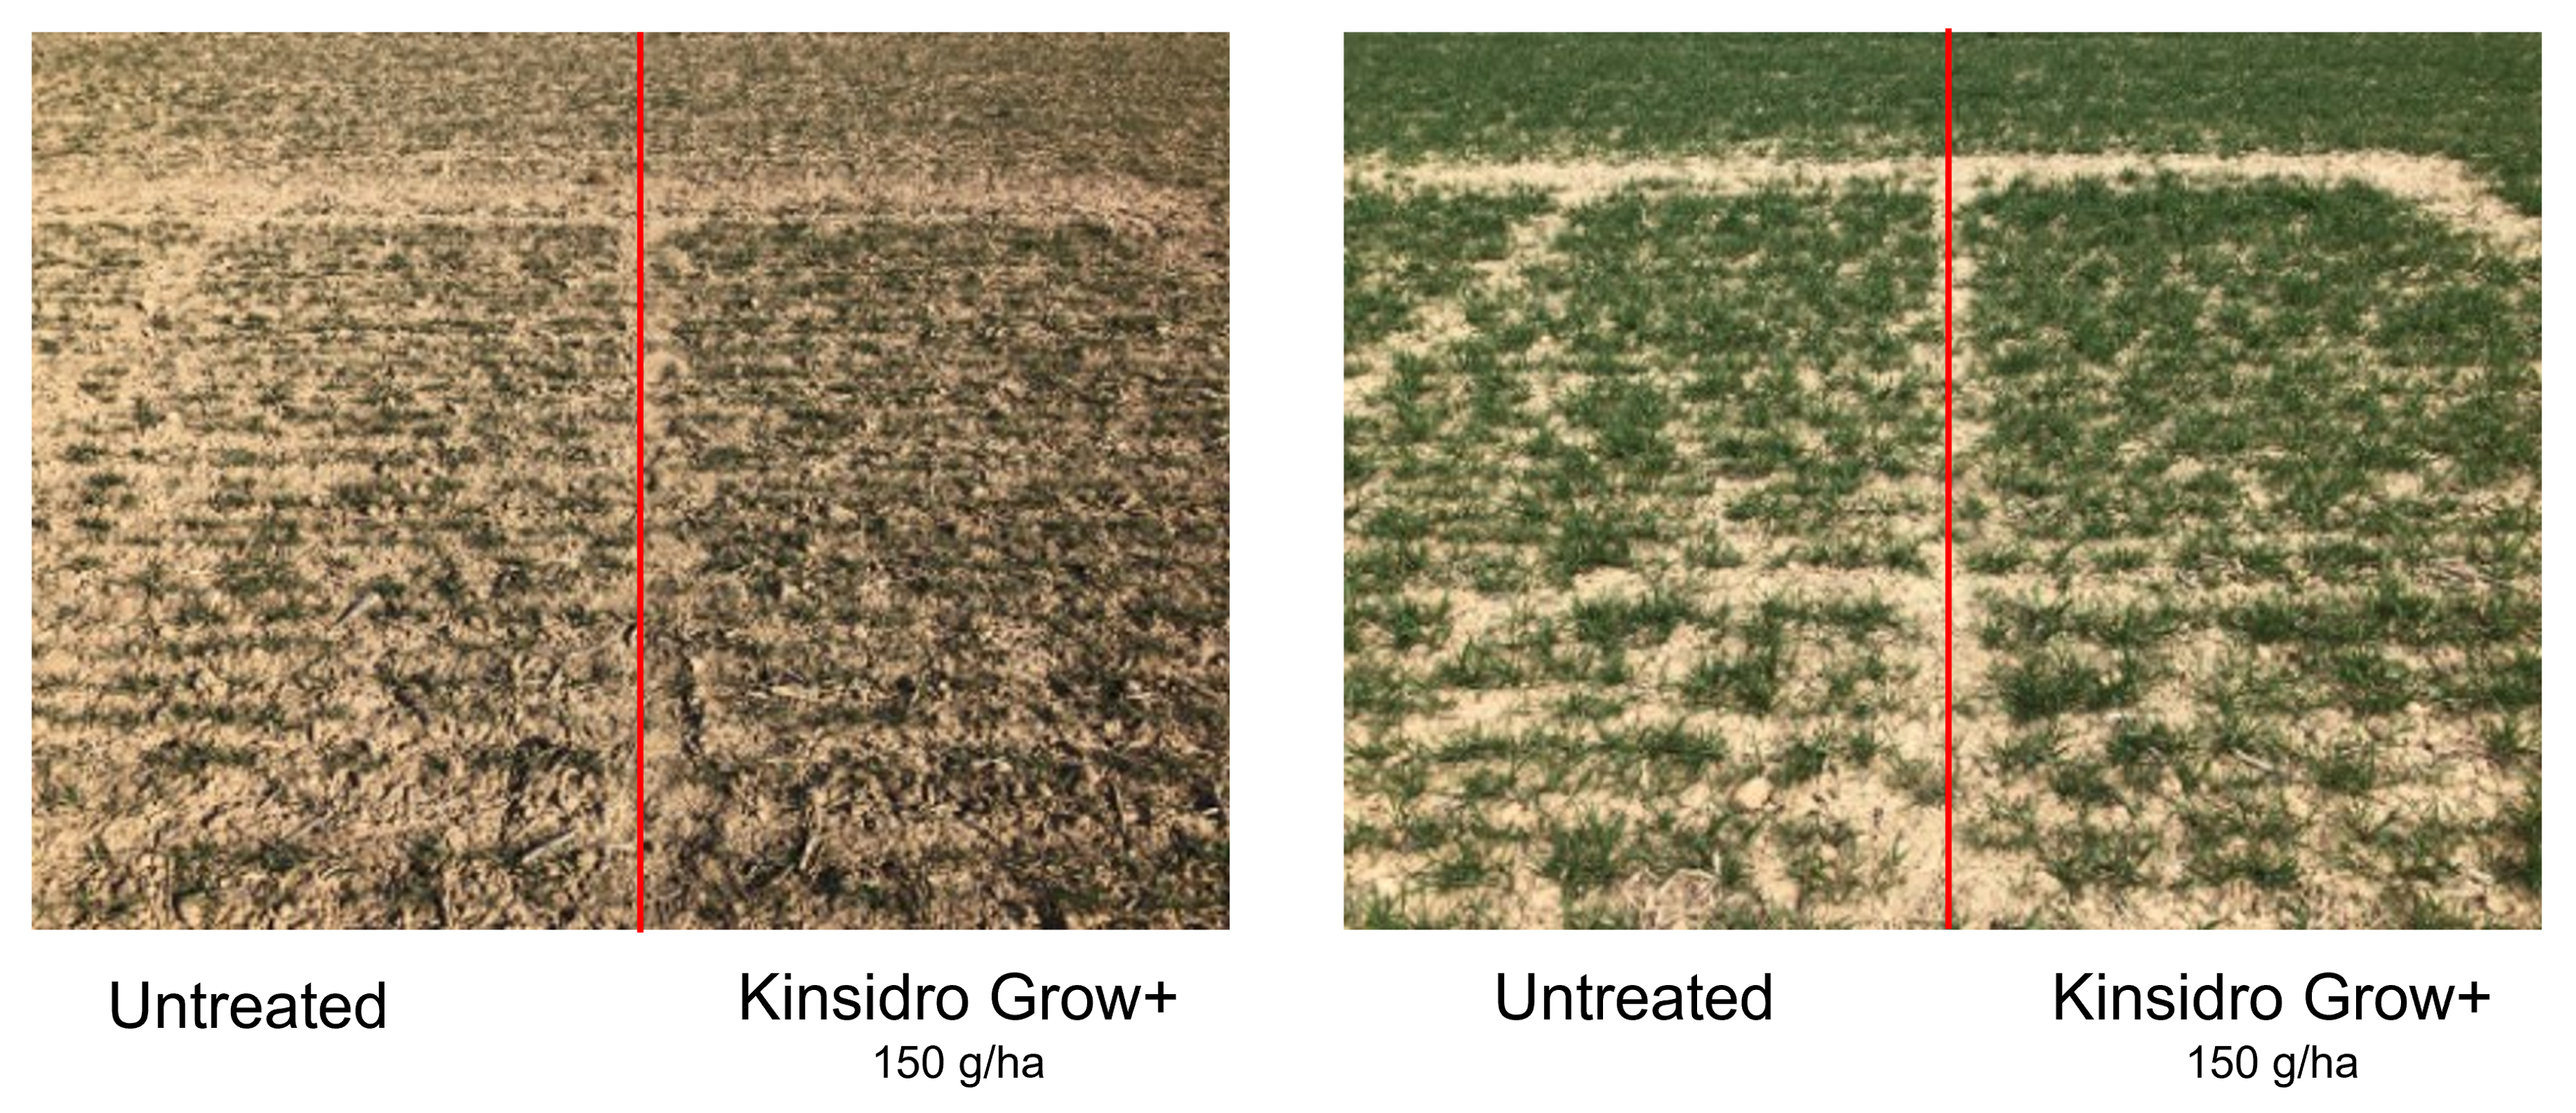 Kinsidro Grow+ trials